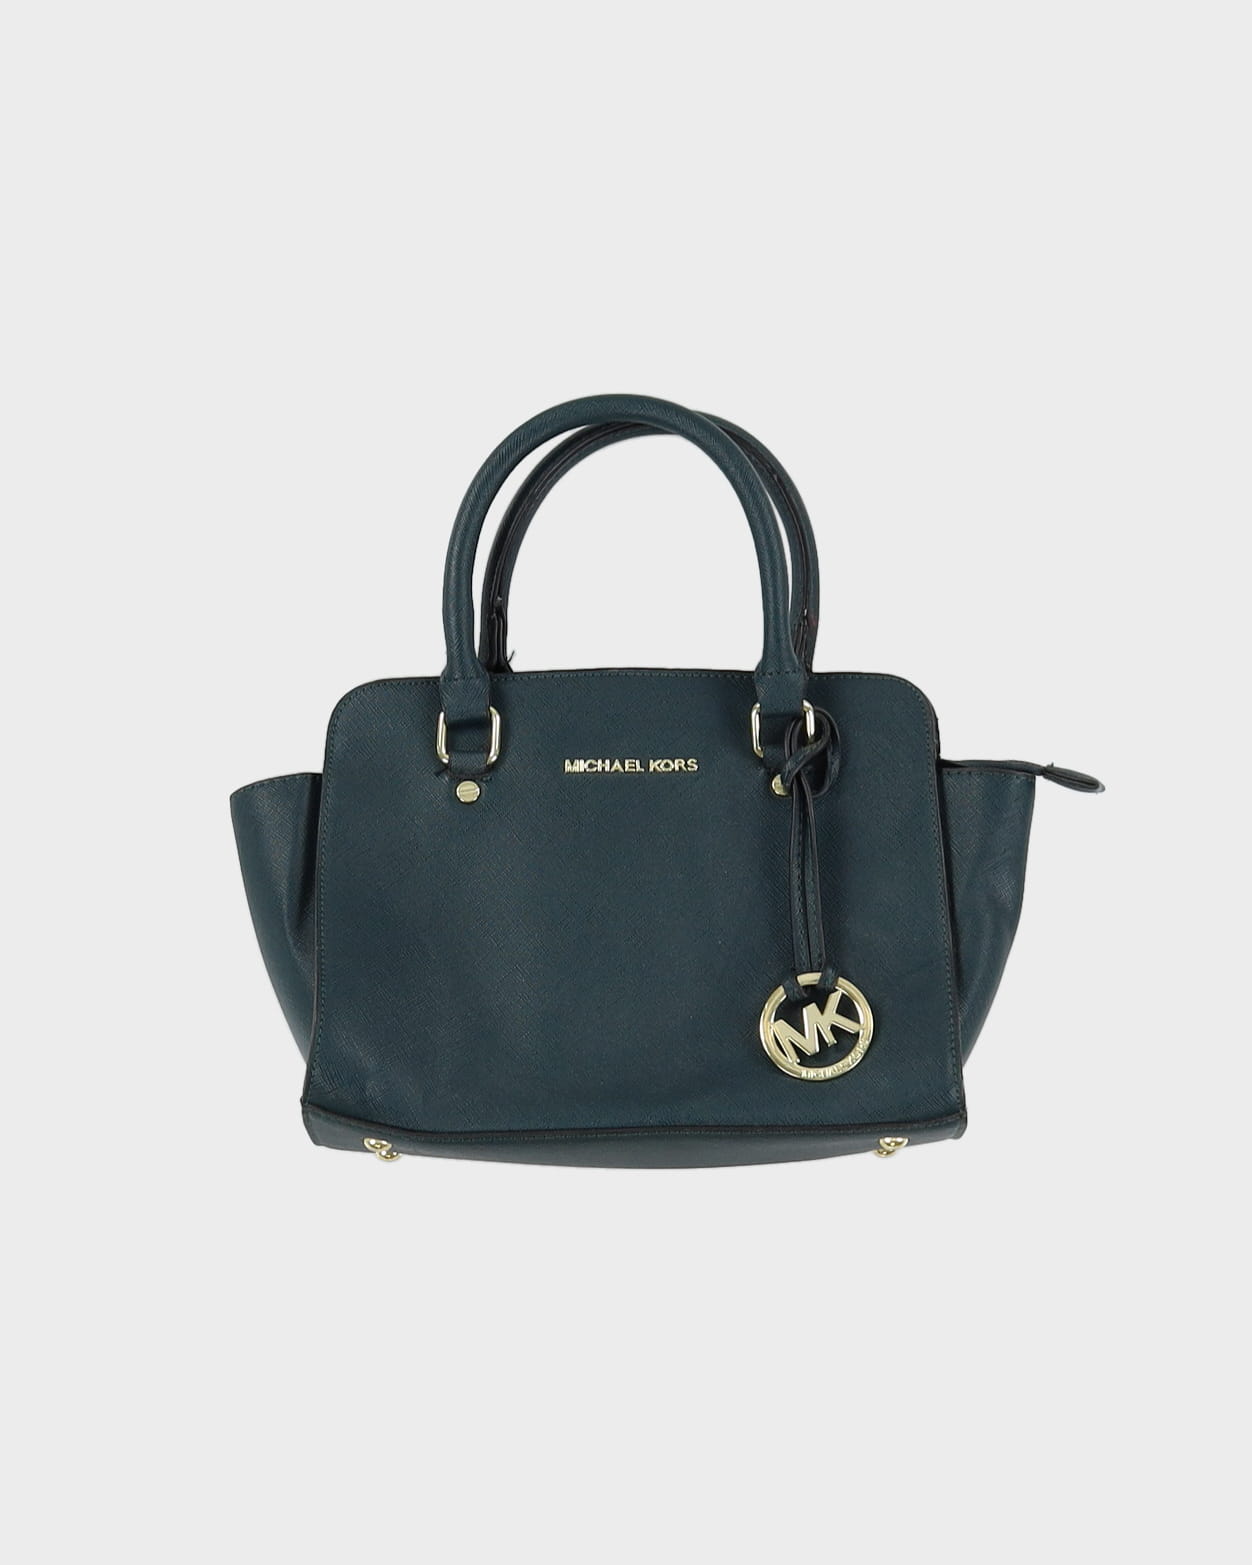 Michael Kors Blue Handbag - One Size